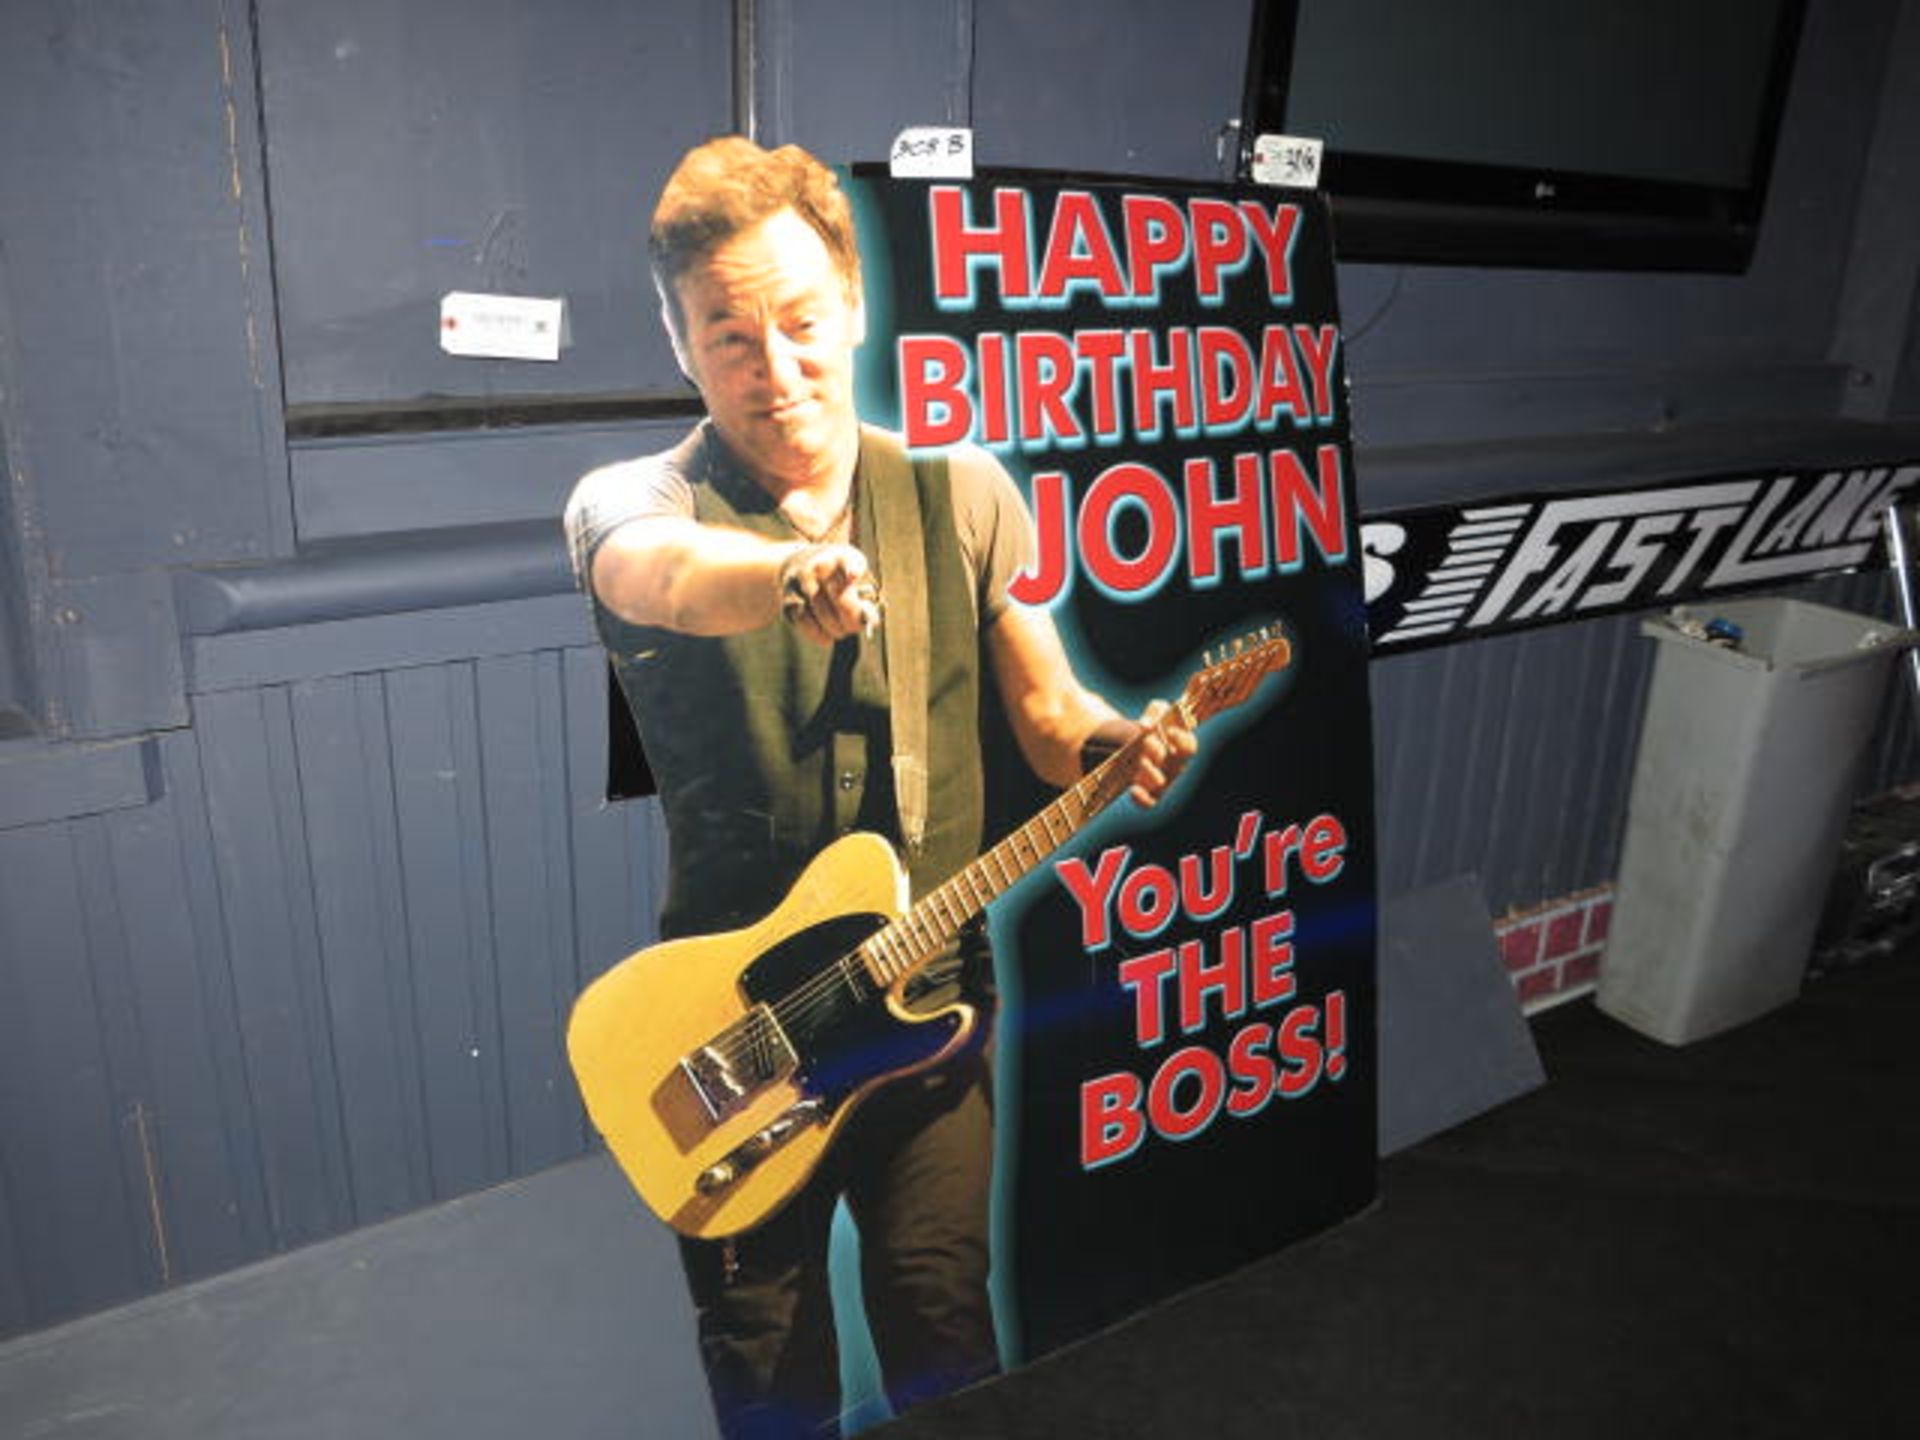 Bruce Springsteen Wishing "Happy Birthday" to John